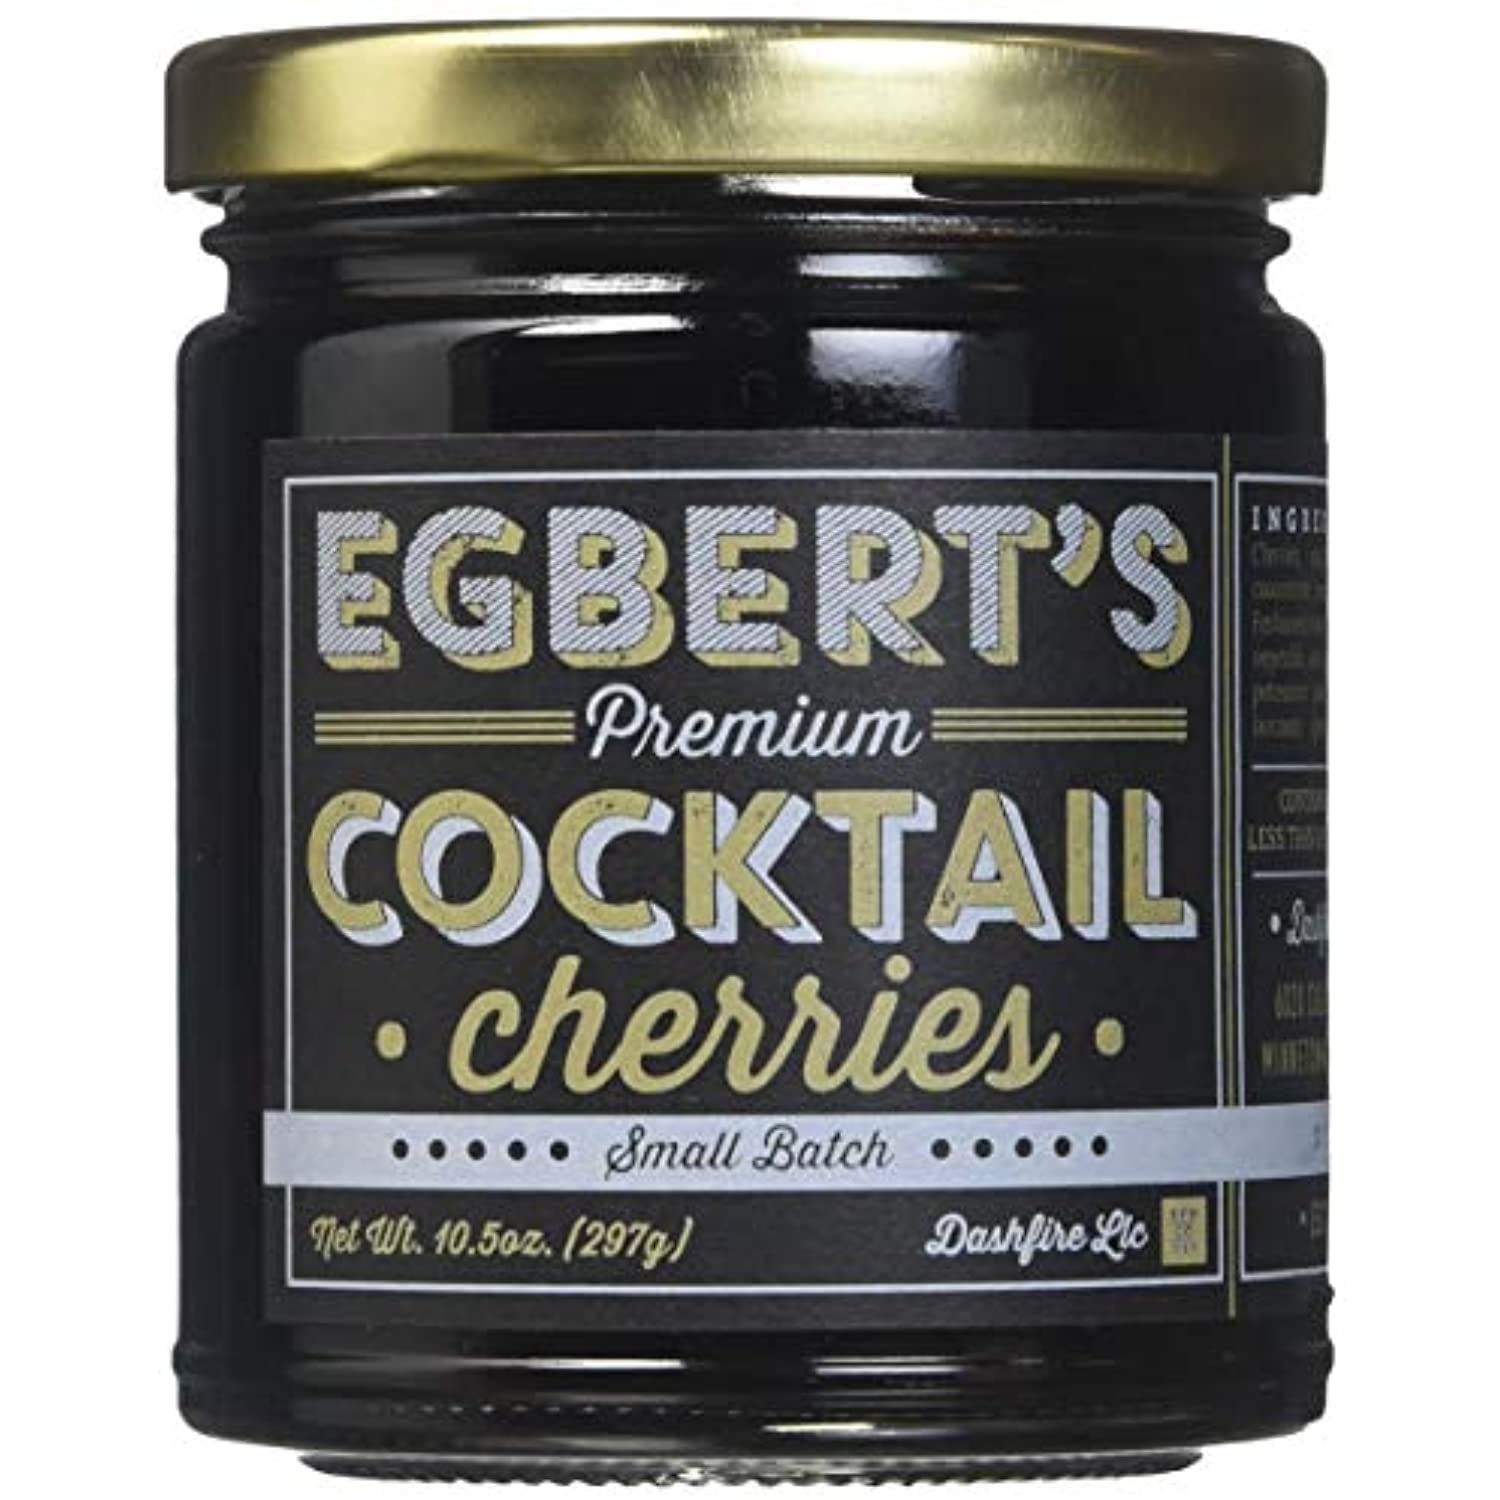 Egbert’s Premium Cocktail Cherries 10.5oz